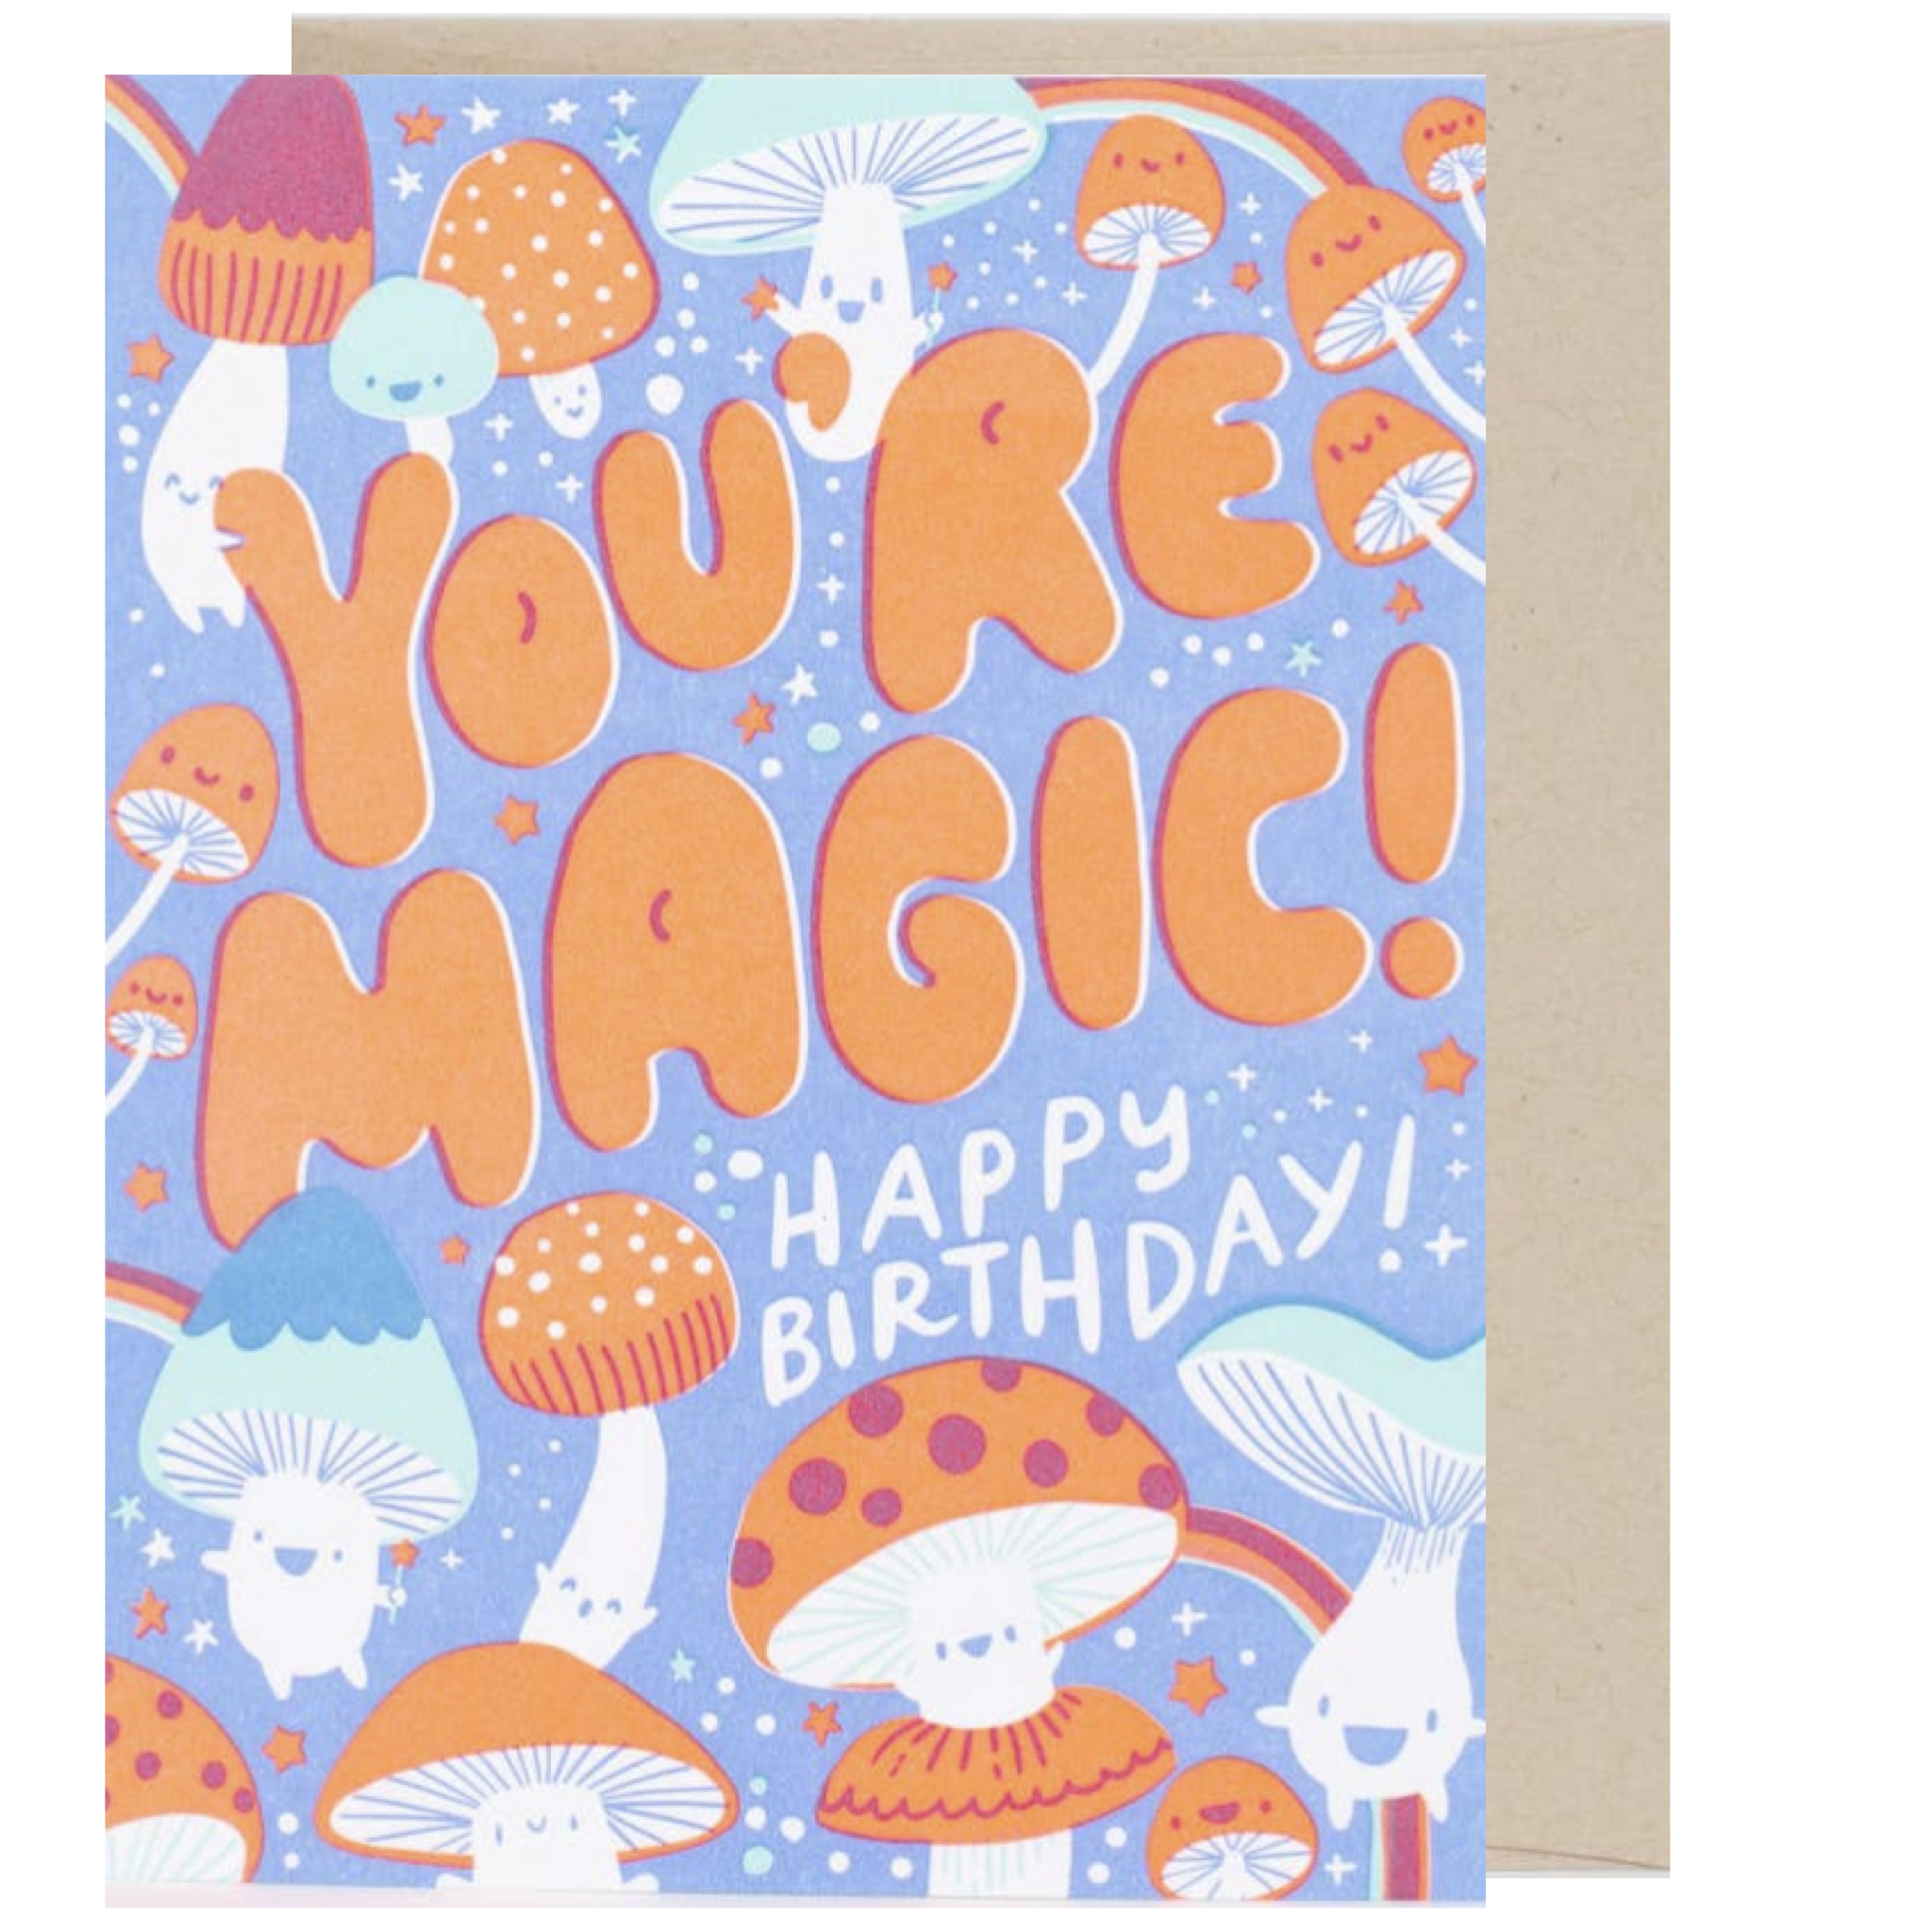 Magic Birthday greeting card